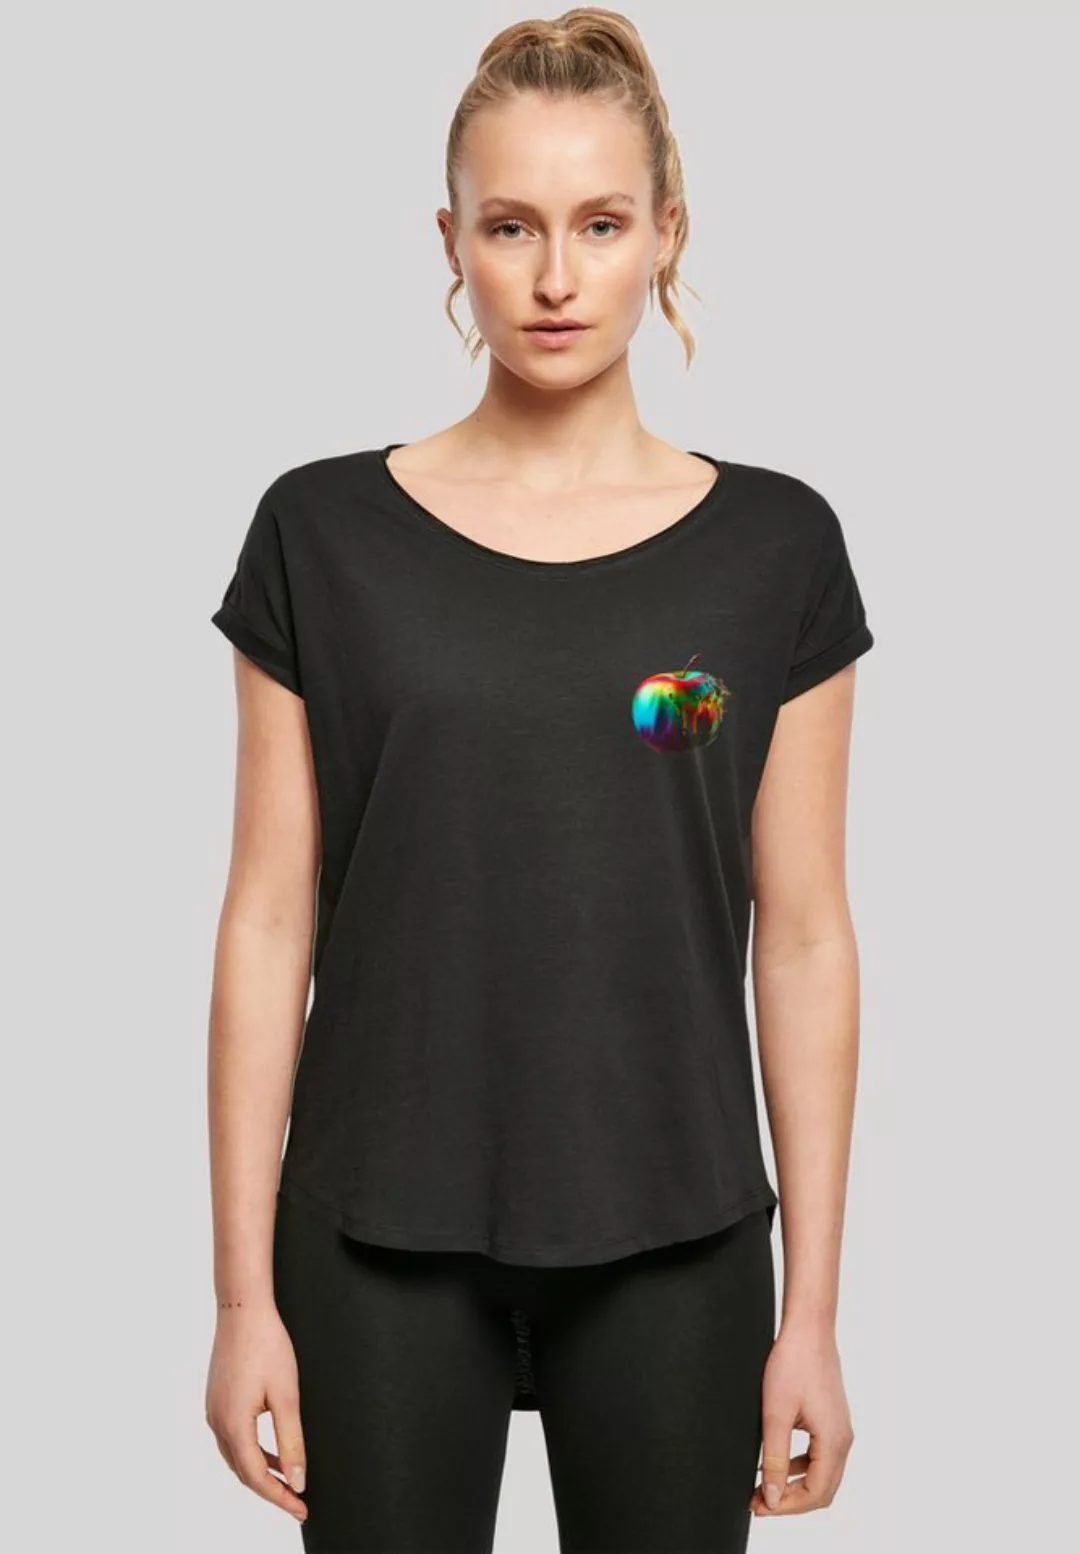 F4NT4STIC T-Shirt Colorfood Collection - Rainbow Apple Print günstig online kaufen